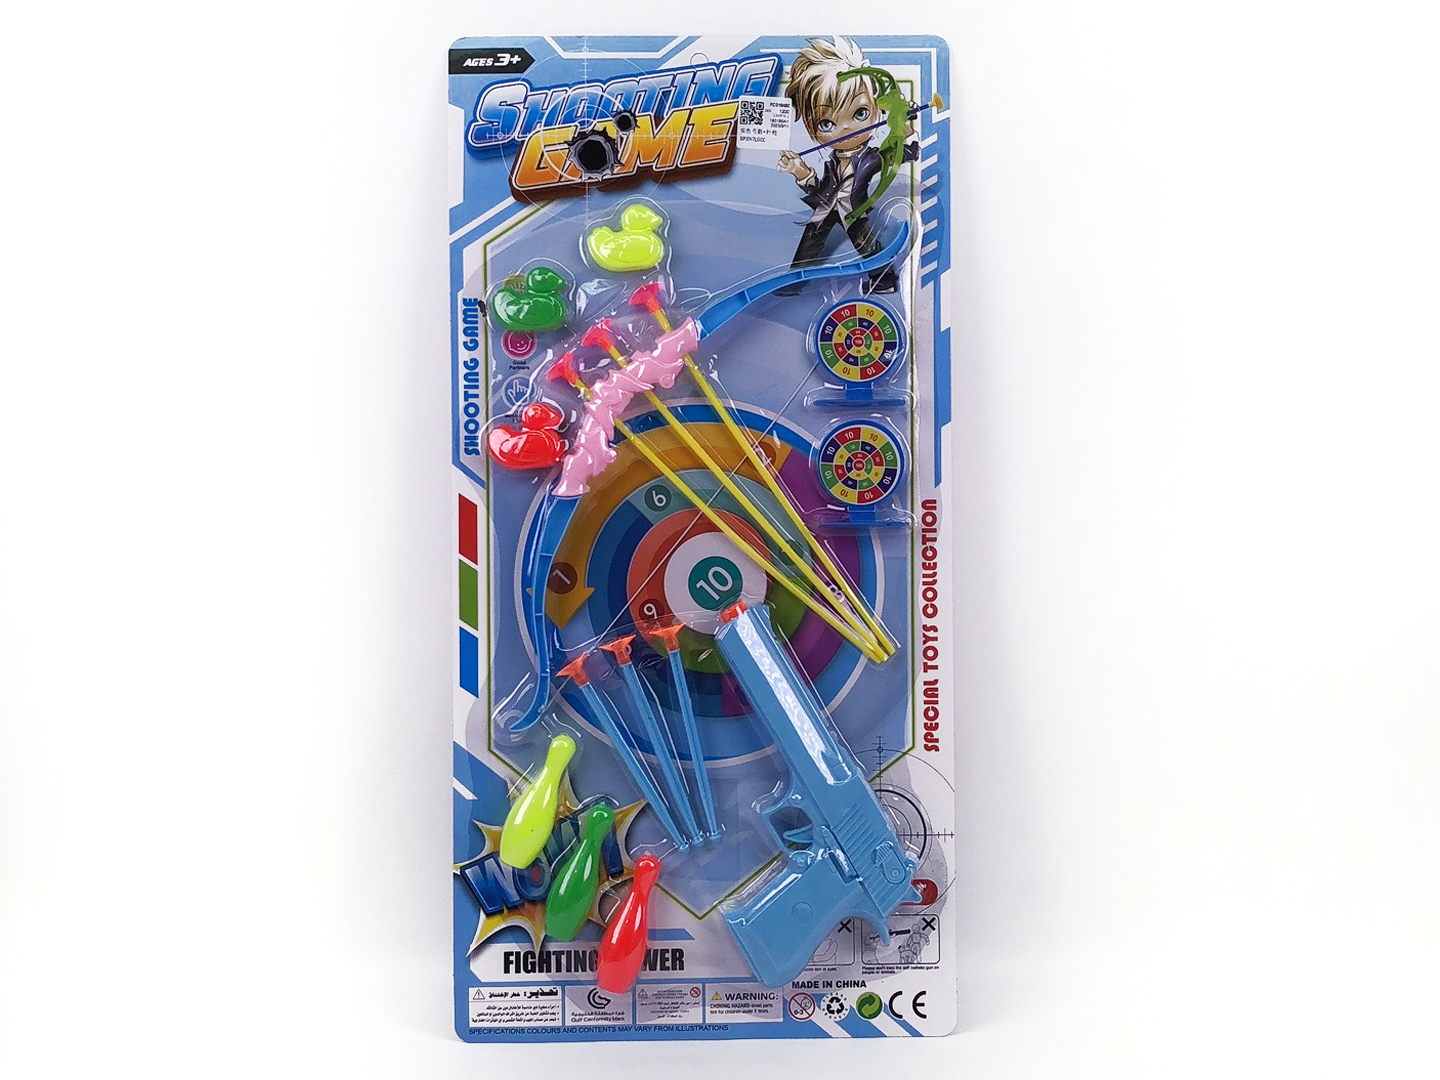 Bow_Arrow & Toys Gun toys